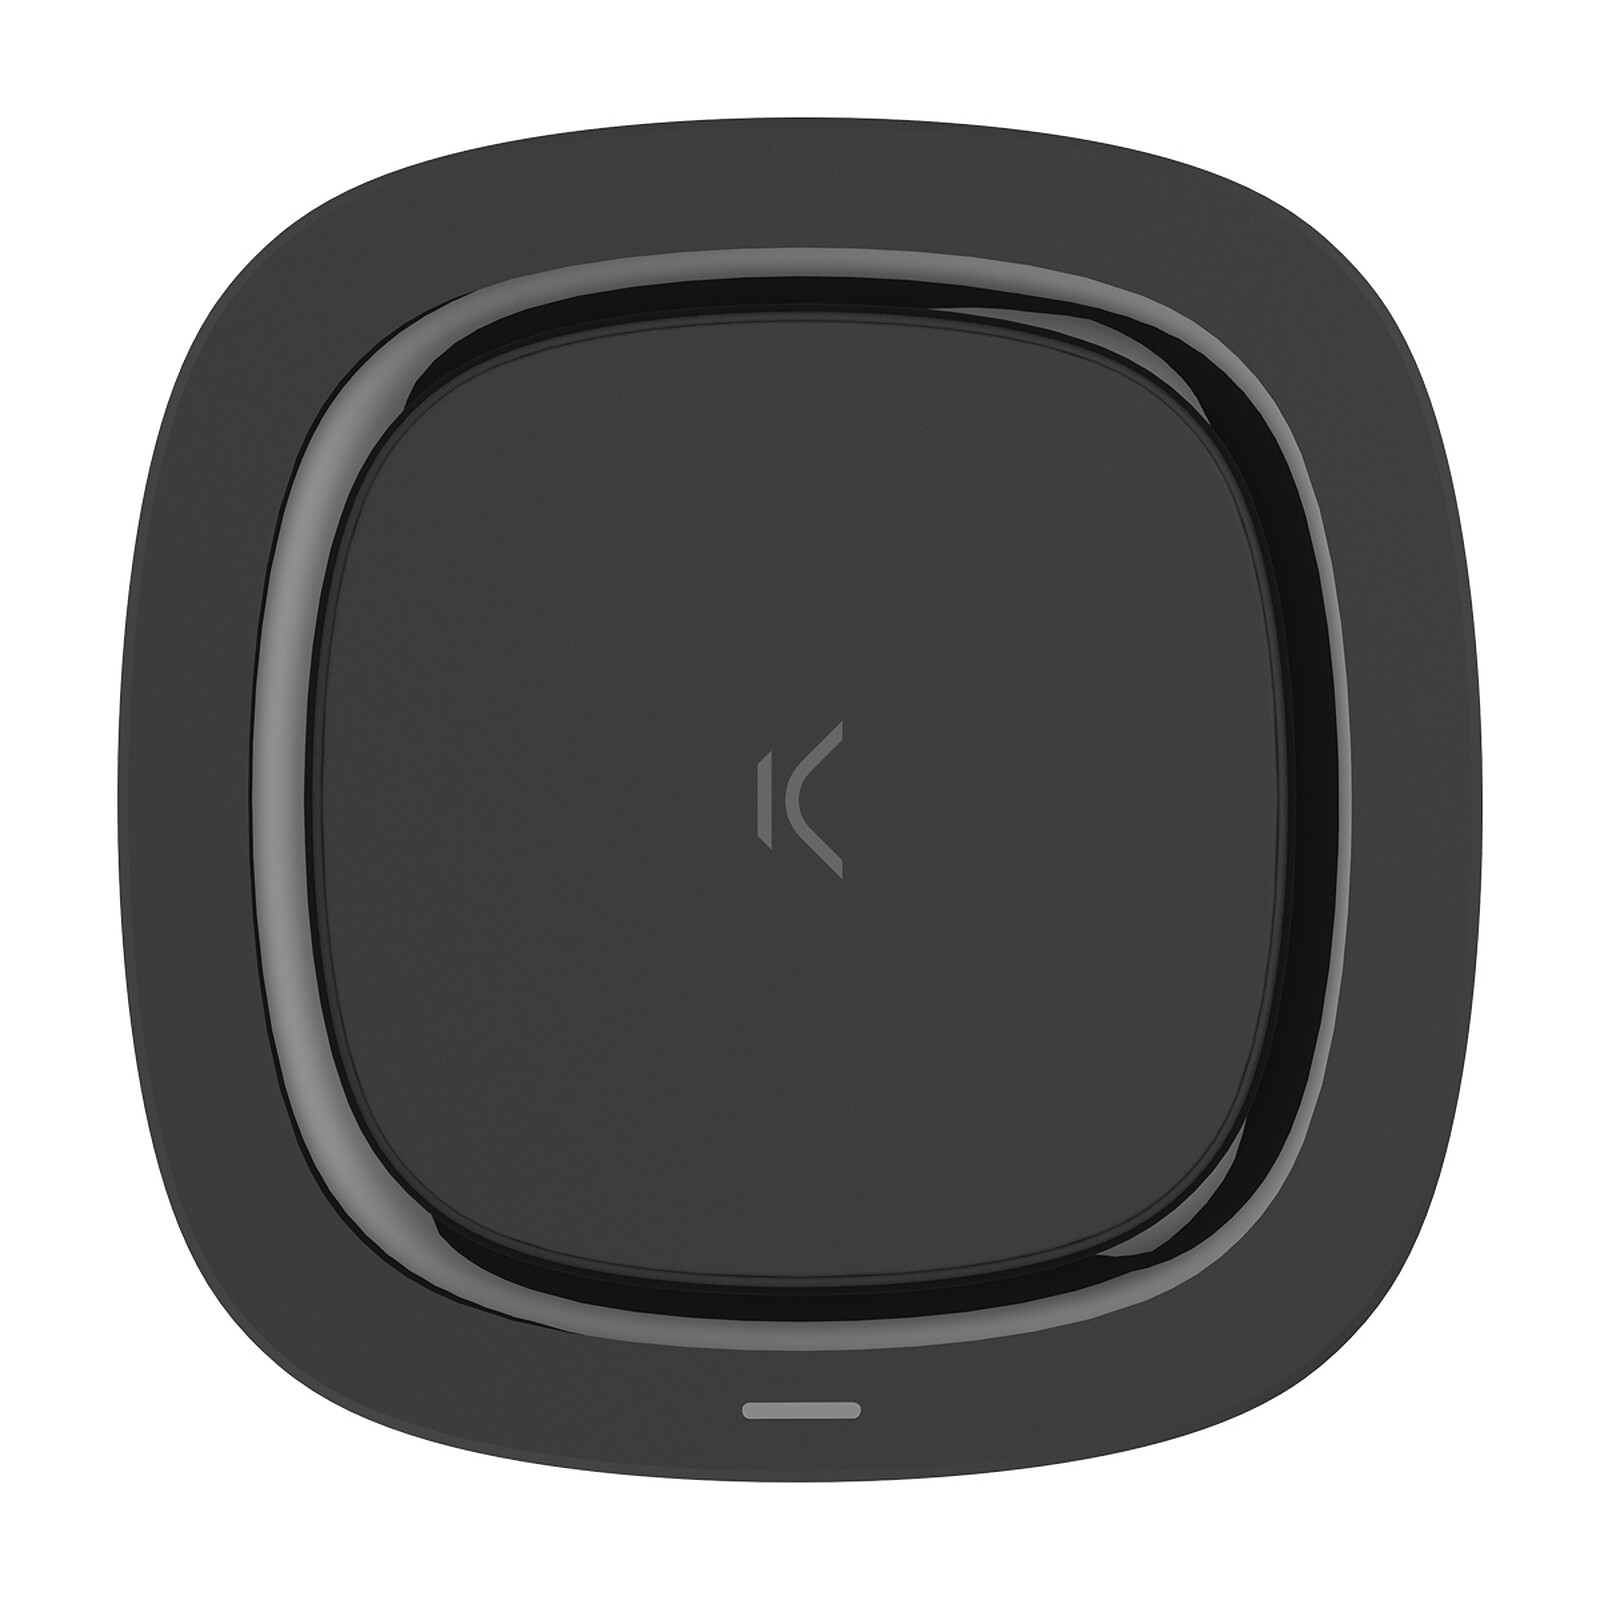 Ksix Cargador de Coche para iPhone 18W Power Delivery + Cable USB-C  Lightning